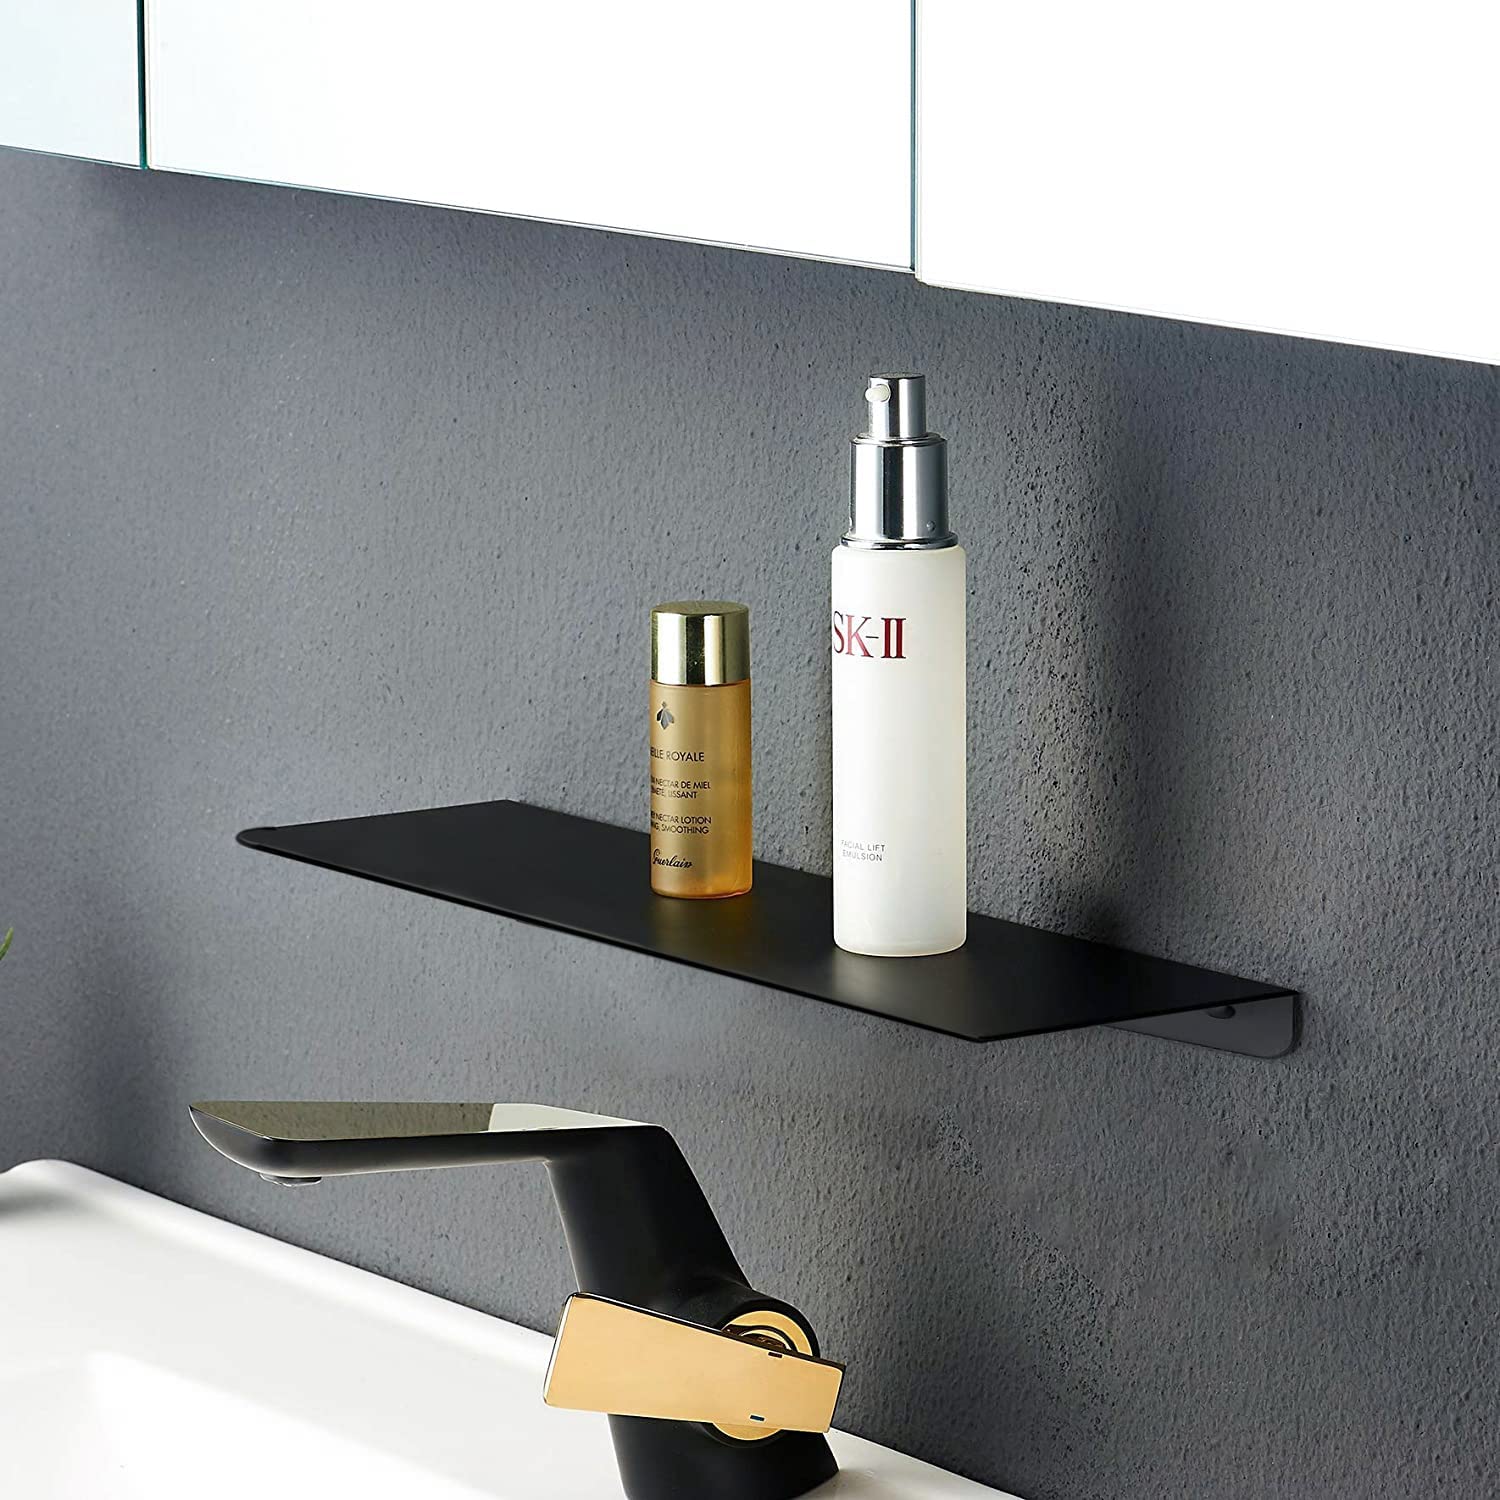 Plantex Aluminium Powder Coated Floating Bathroom Shelf/Organizer/Rack for Bedroom/Living Room/Kitchen/Bathroom Accessories (15 x 5 inch - Black)